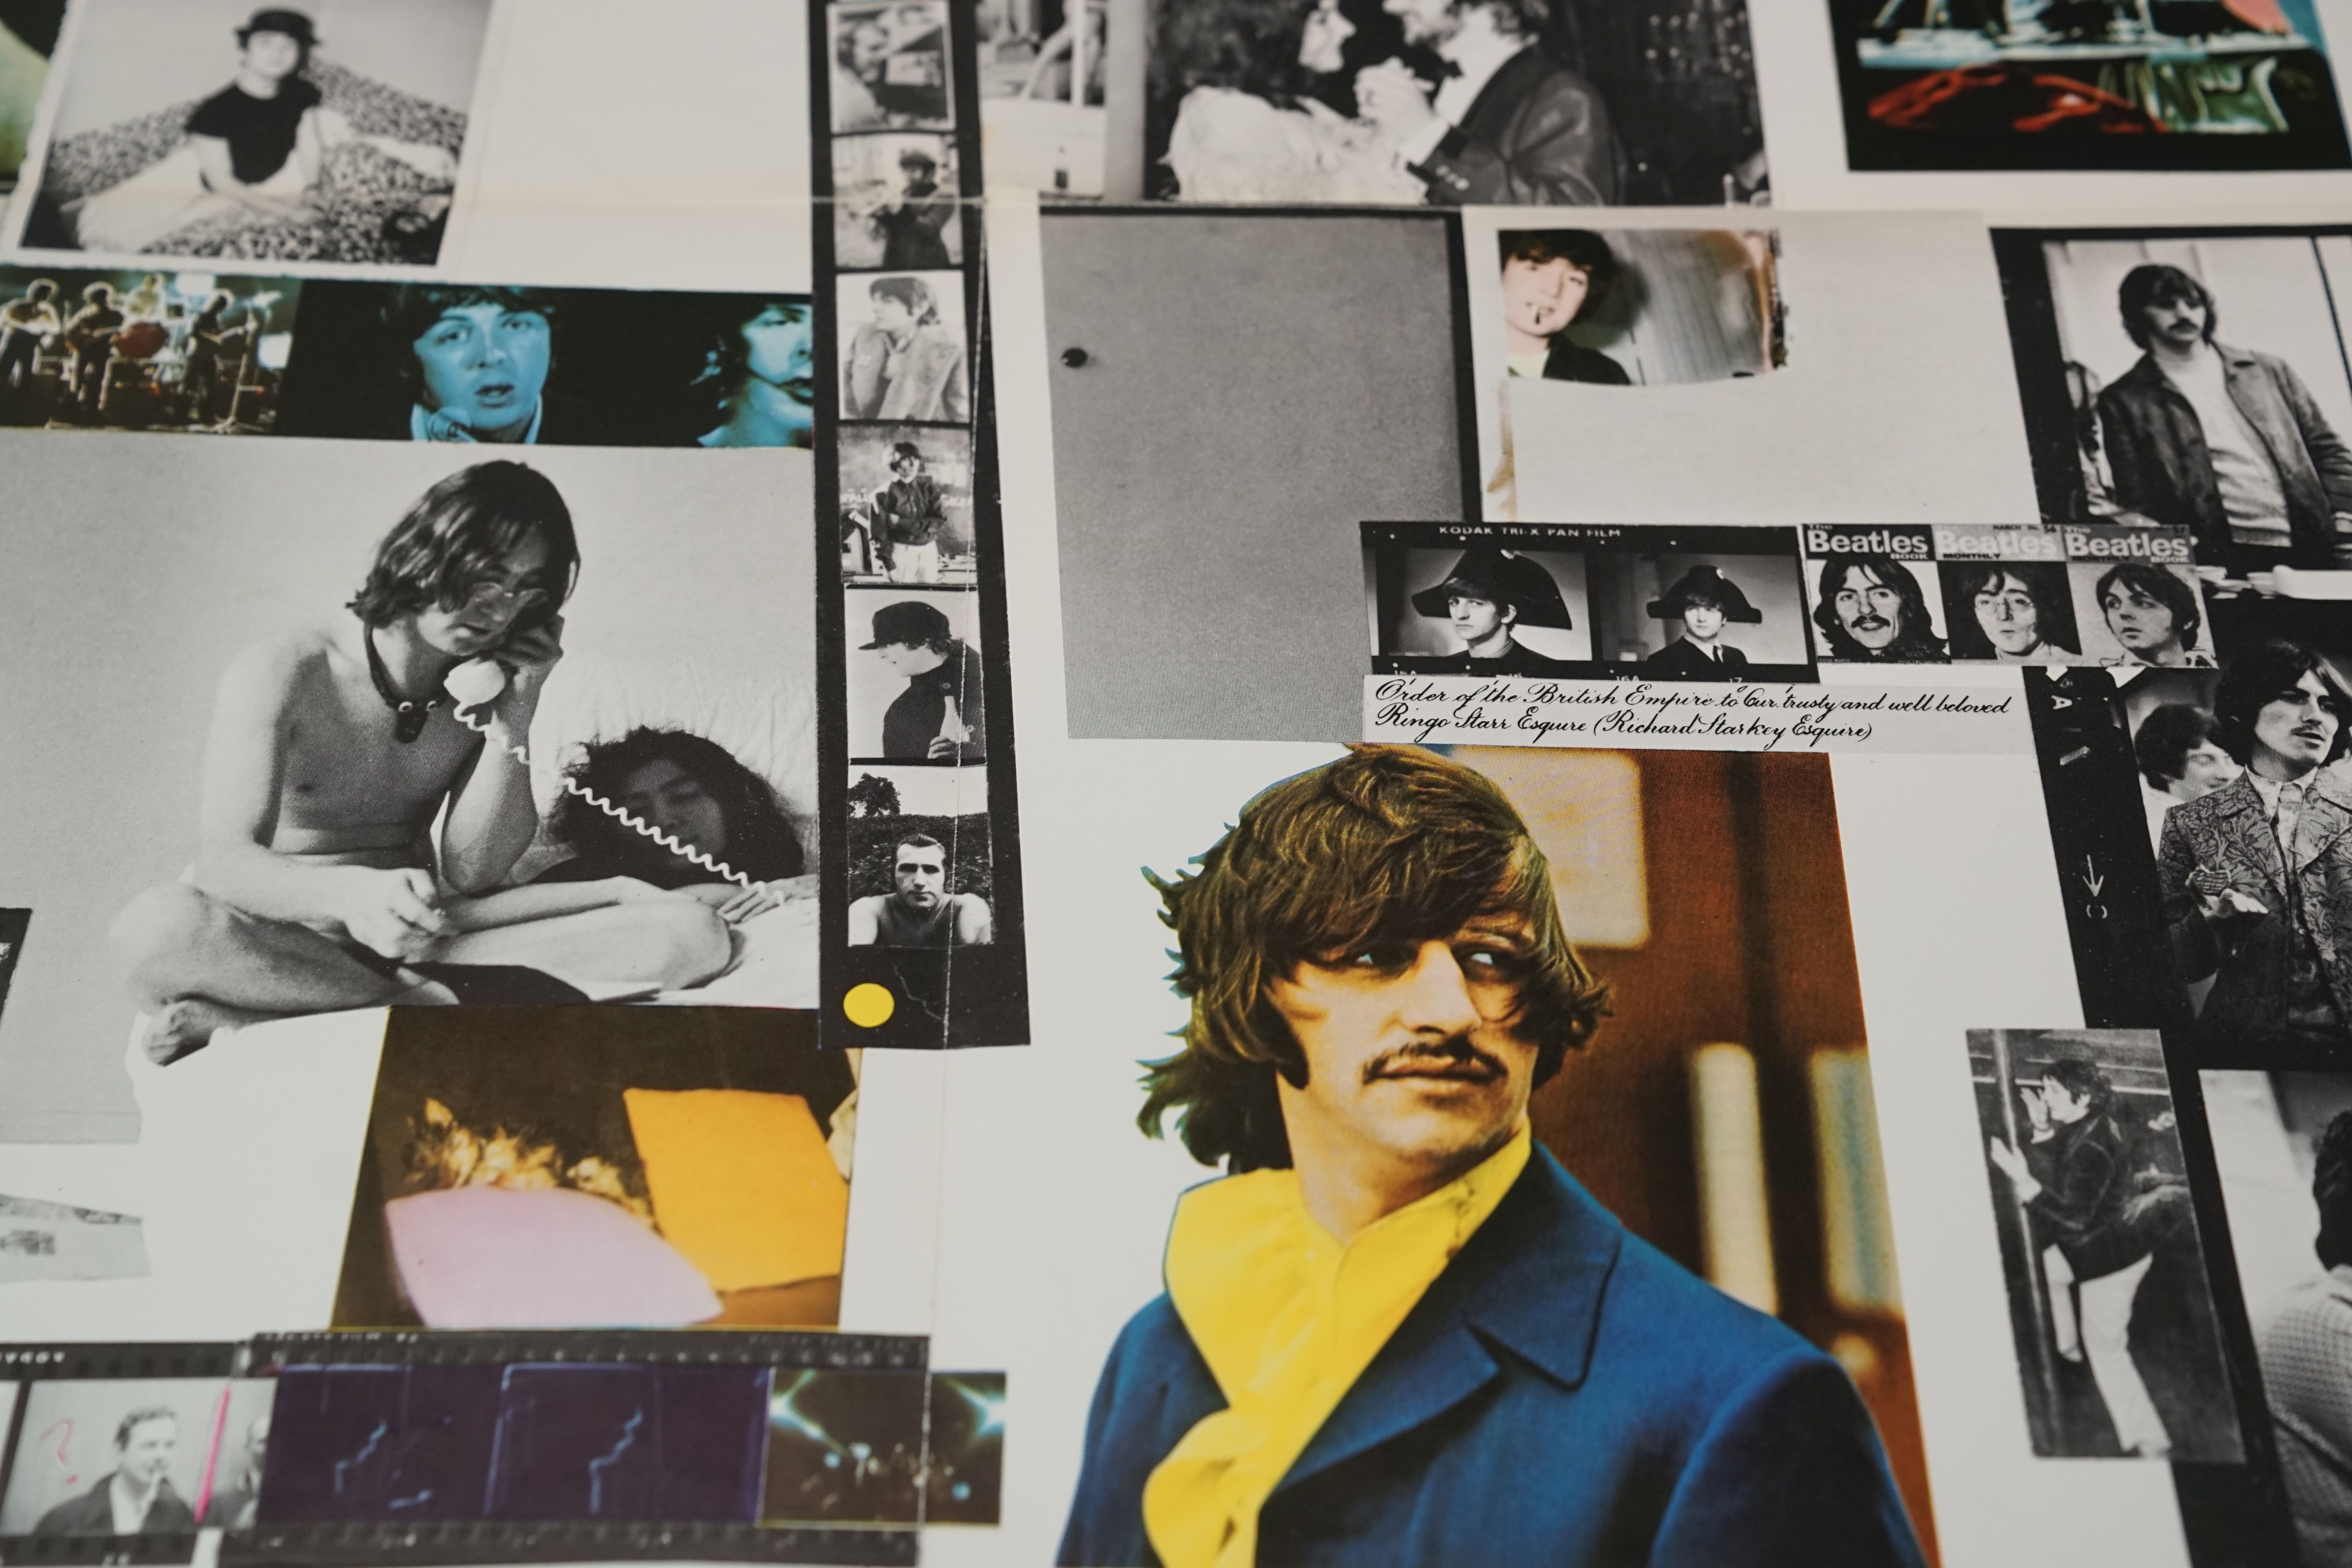 Vinyl - The Beatles White Album (PCS 706718) Stereo top loader No 0399149, three photos (Lennon - Image 13 of 14